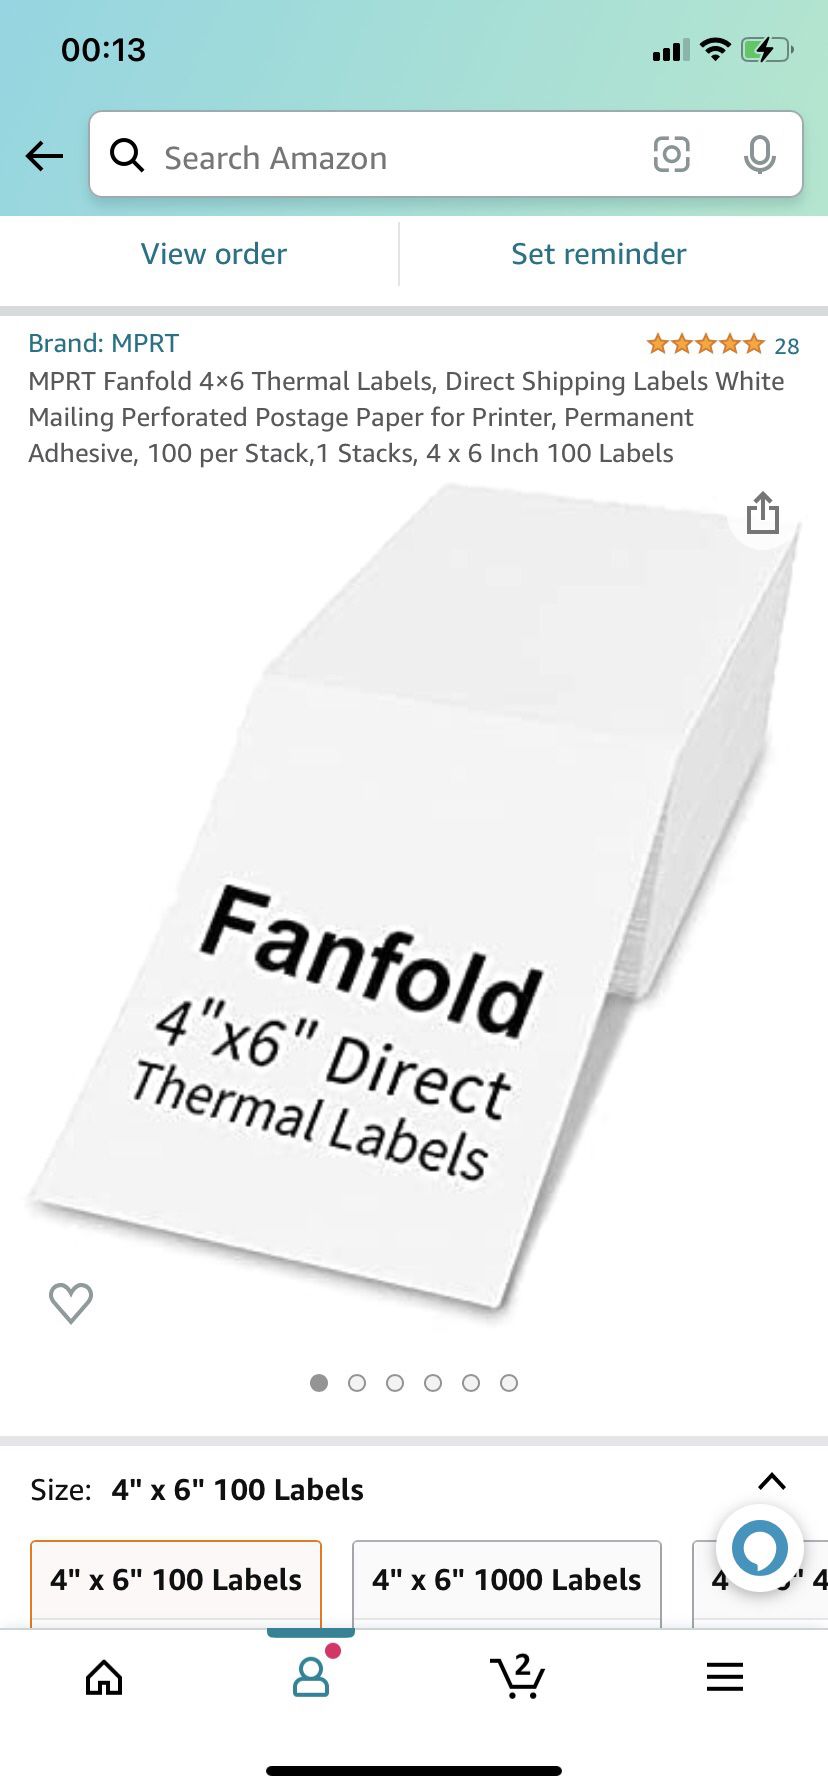 New Thermal Label Printer & Shipping Label。. Frim price